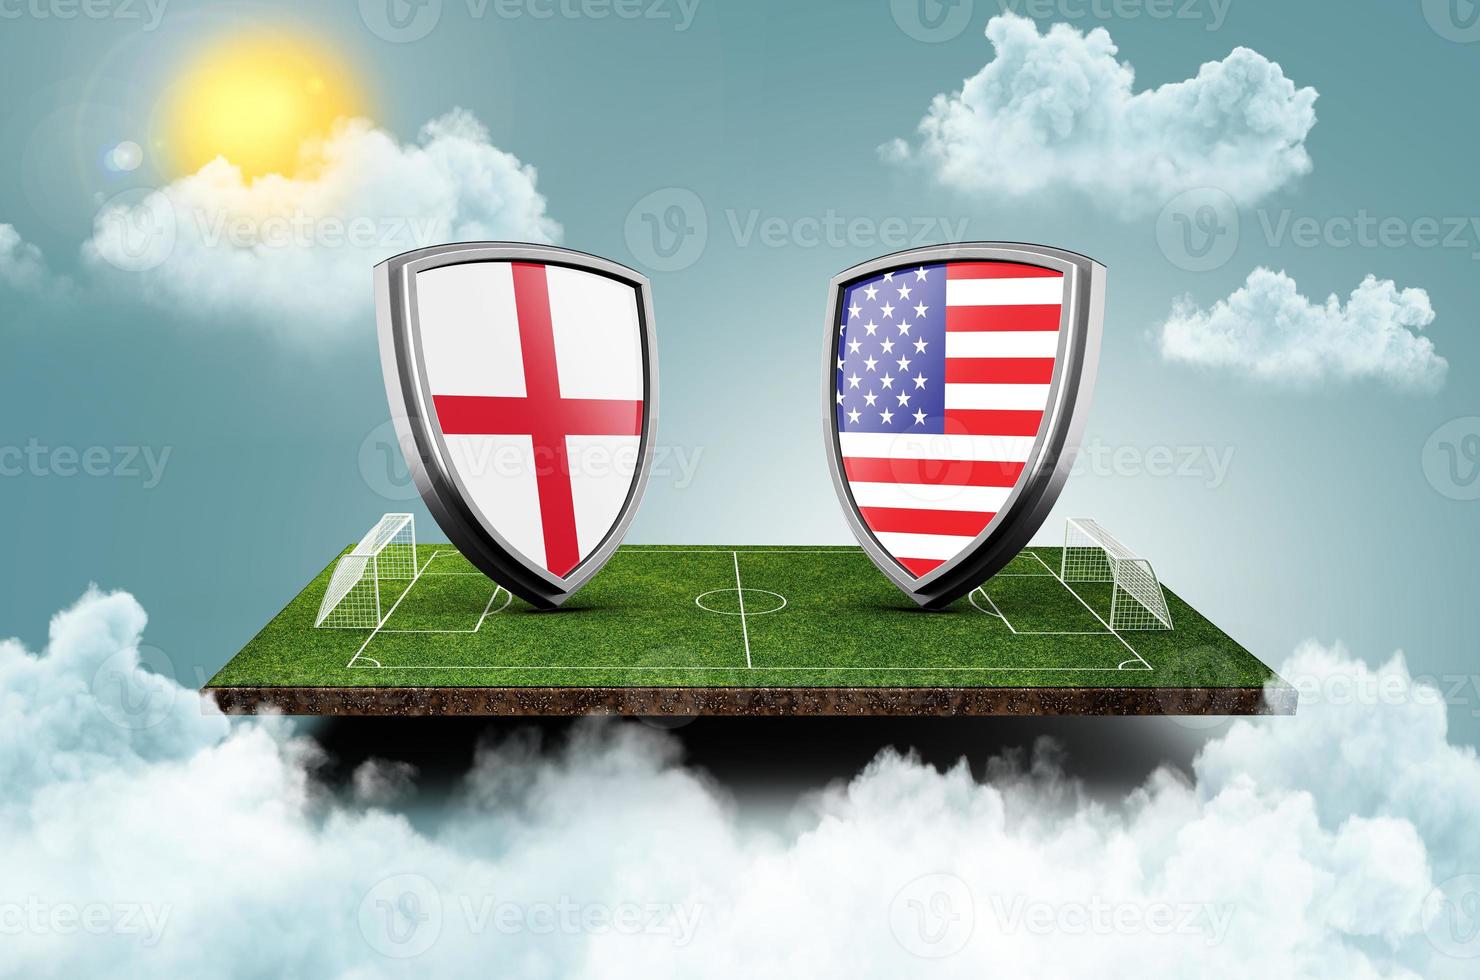 England vs USA Versus screen banner Soccer concept. football field stadium, 3d illustration photo